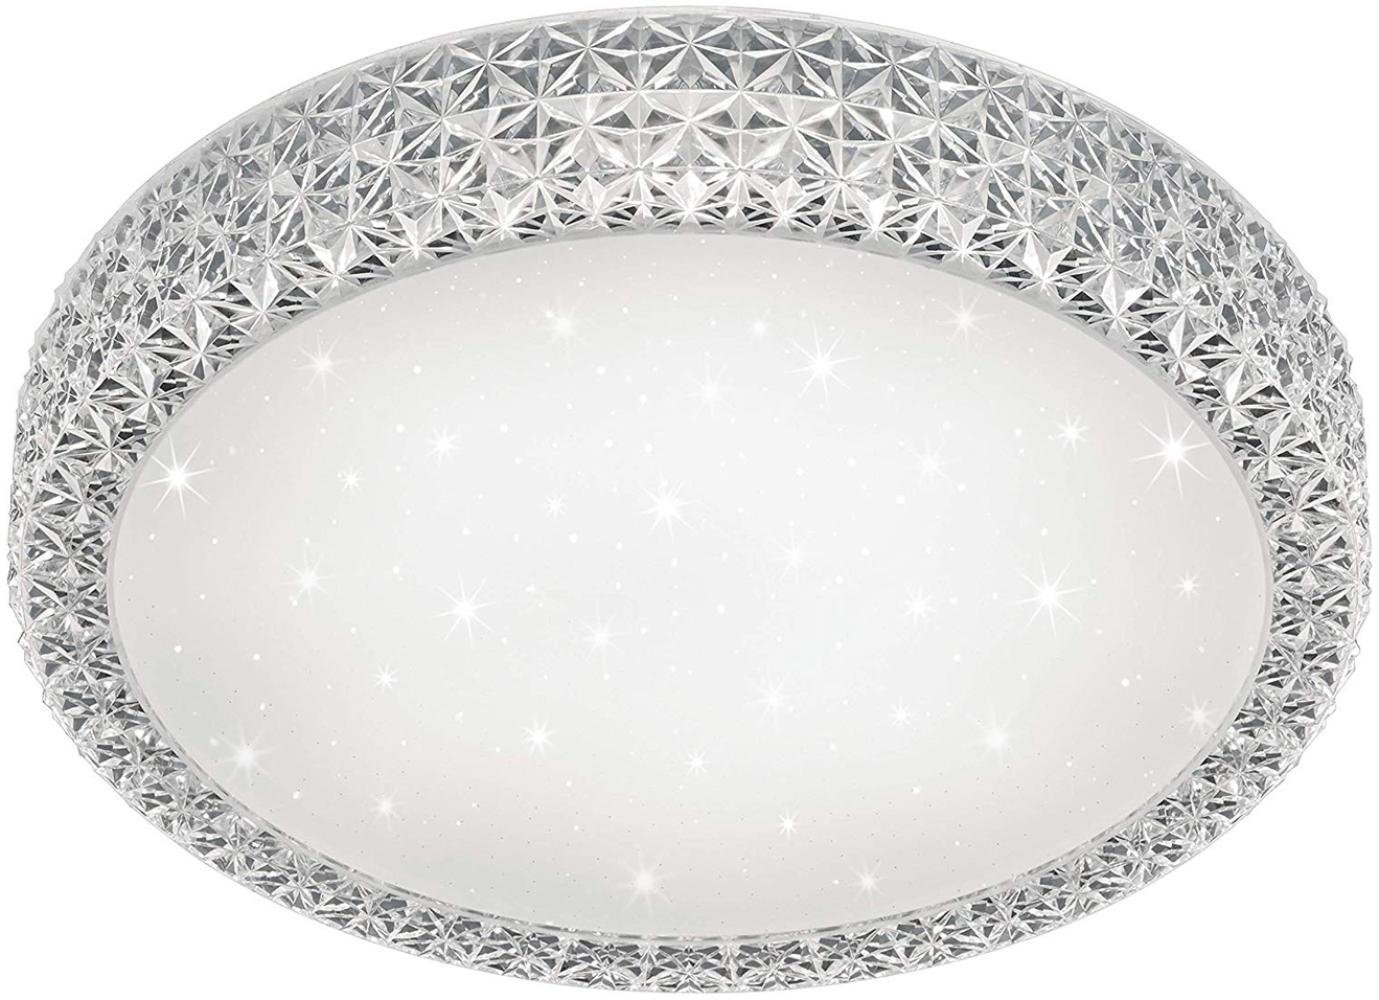 Dimmbare LED Deckenlampe PEGASUS Fernbedienung Ø60cm H. 11cm Weiß Kristall-Optik Bild 1